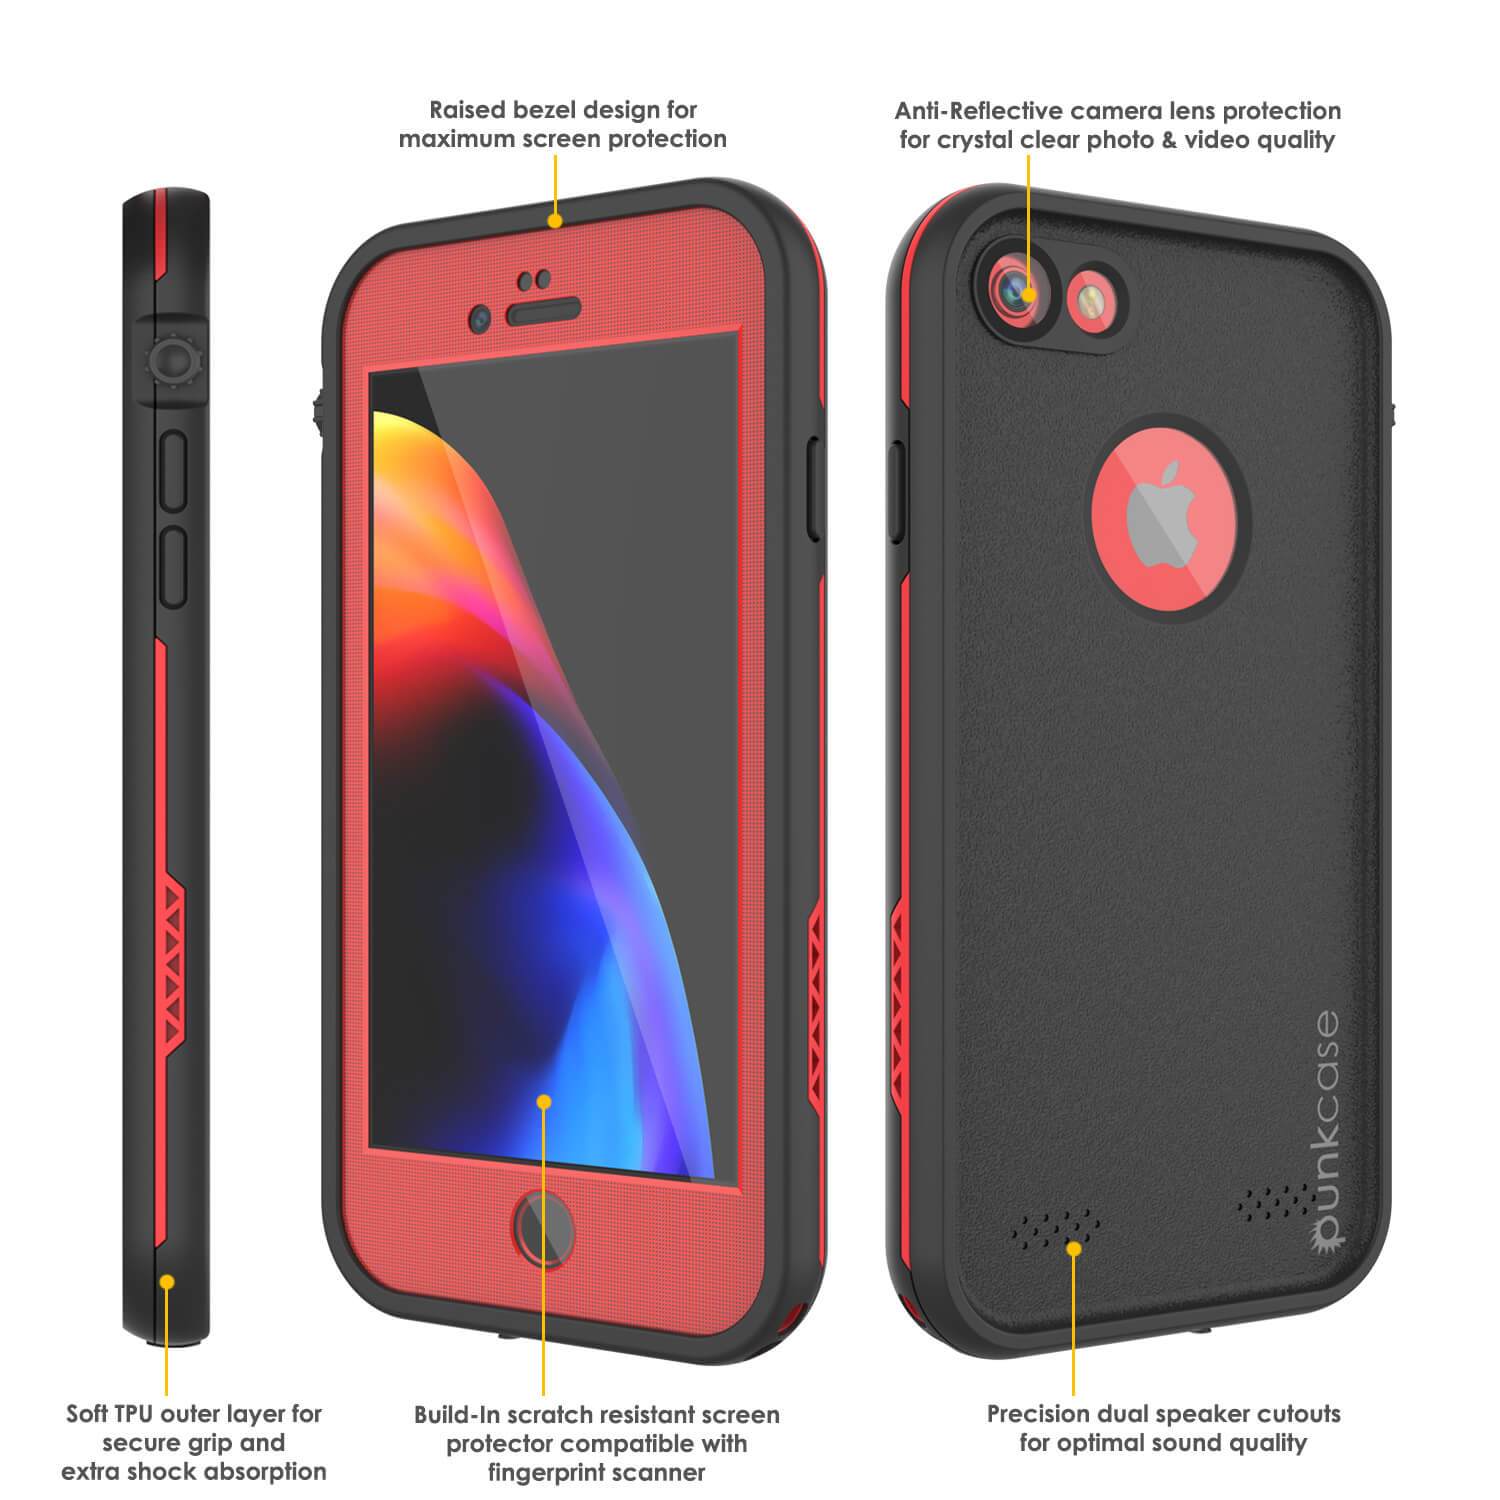 iPhone 7 Waterproof Case, Punkcase SpikeStar Red Series | Thin Fit 6.6ft Underwater IP68